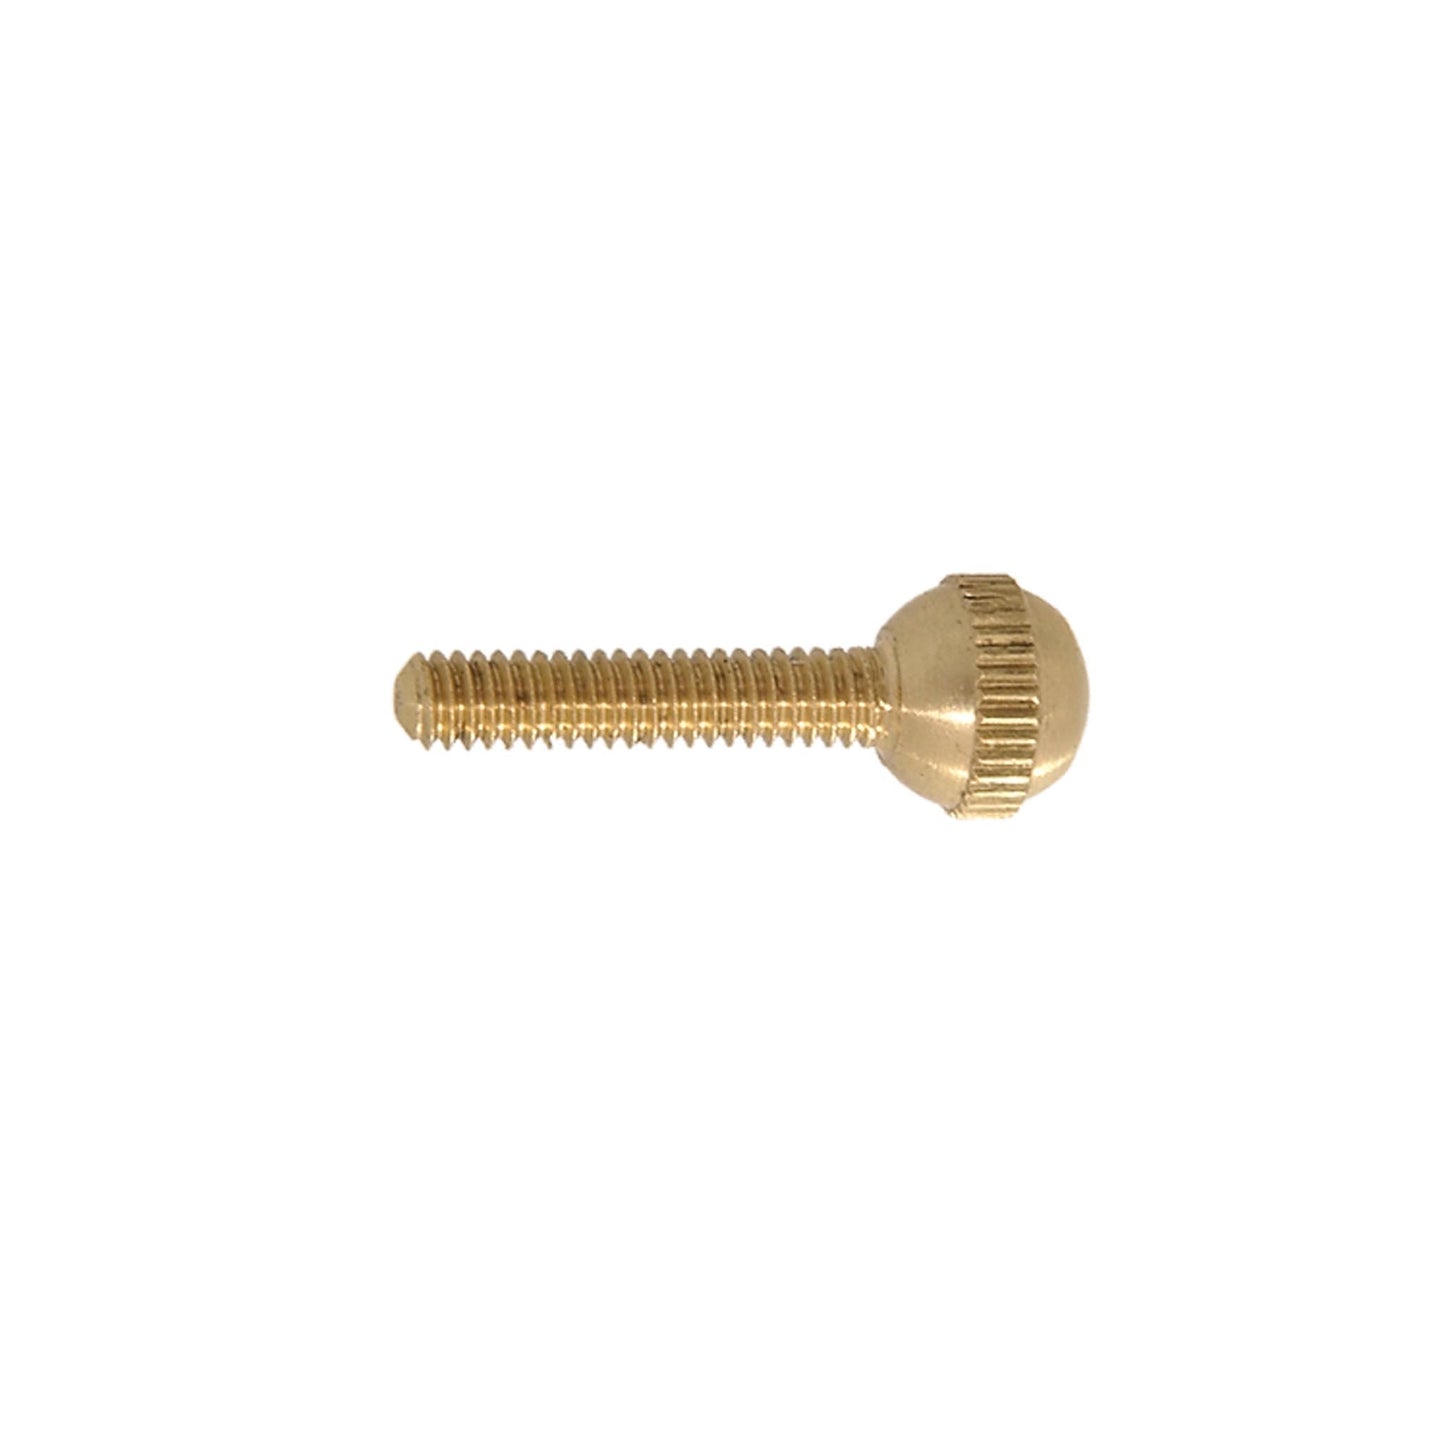 8-32 Brass Ball-Head Shade Holder Thumb Screws, your choice of 1/2" or 3/4" thread length (20883)